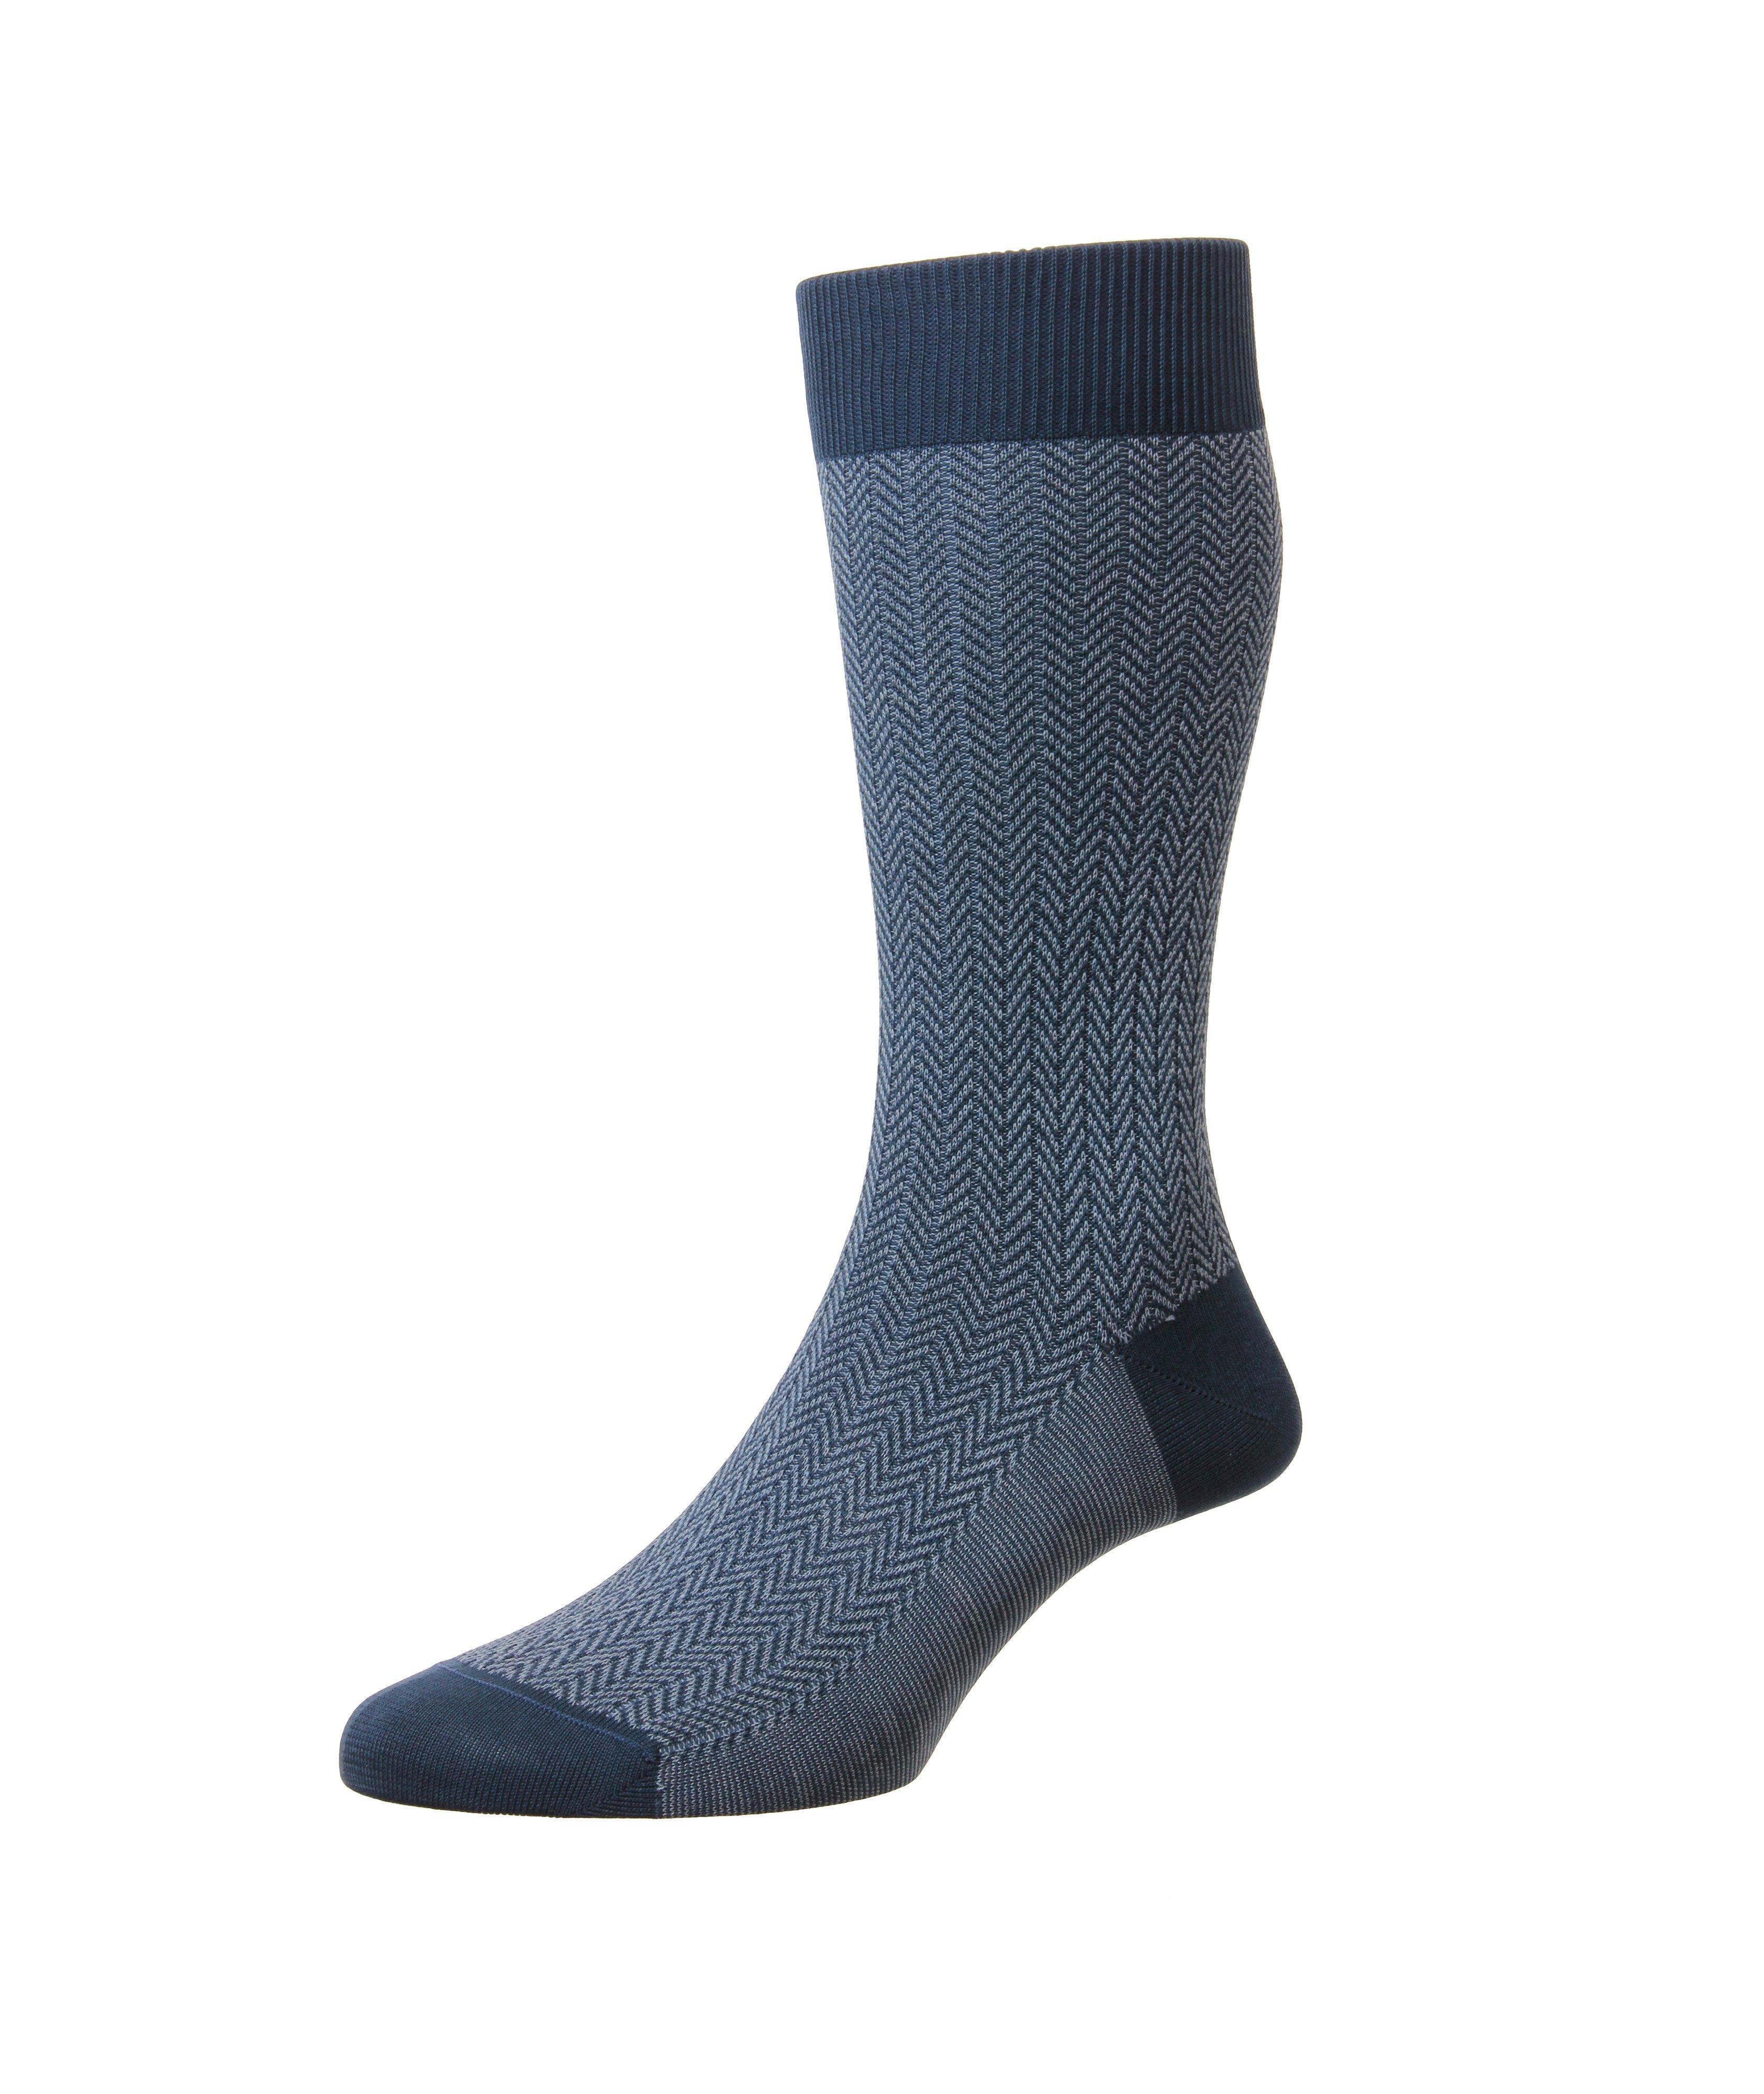 Fabian Cotton-Blend Long Dress Socks image 0